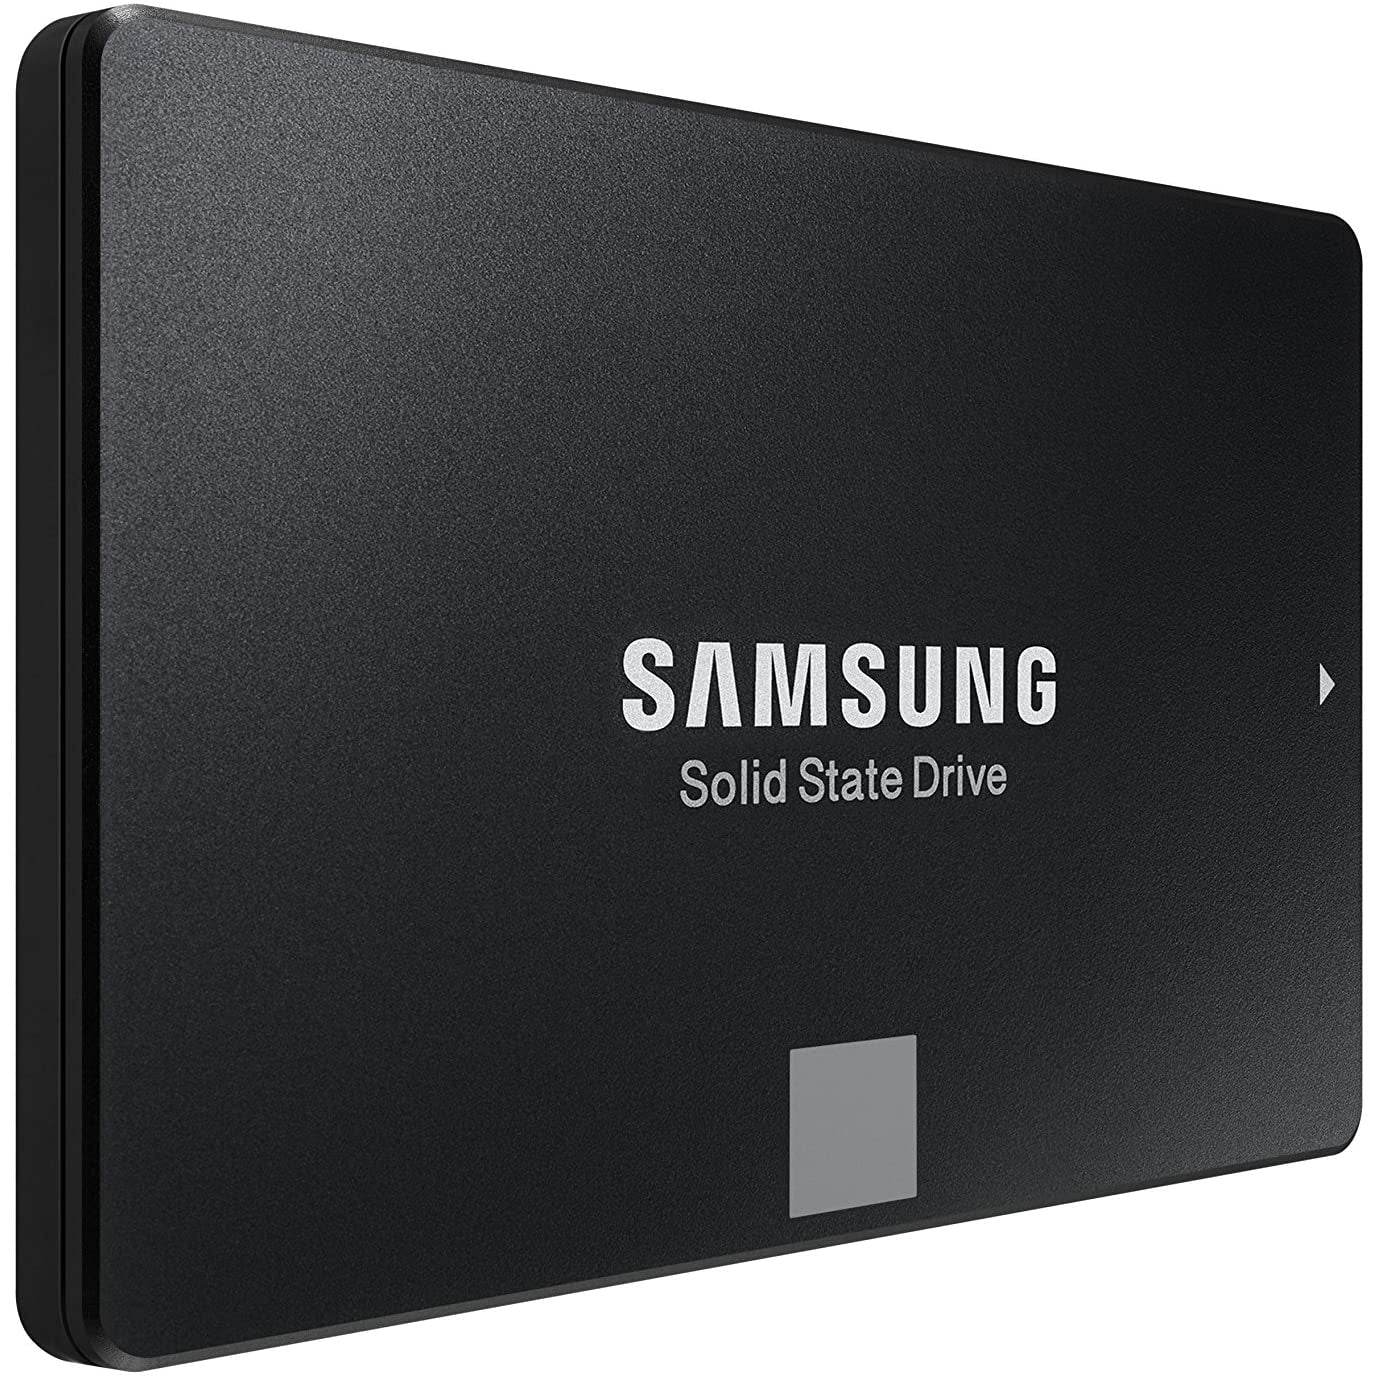 Samsung 860 EVO 500 GB SATA 2.5 Inch Internal Solid State Drive - Black